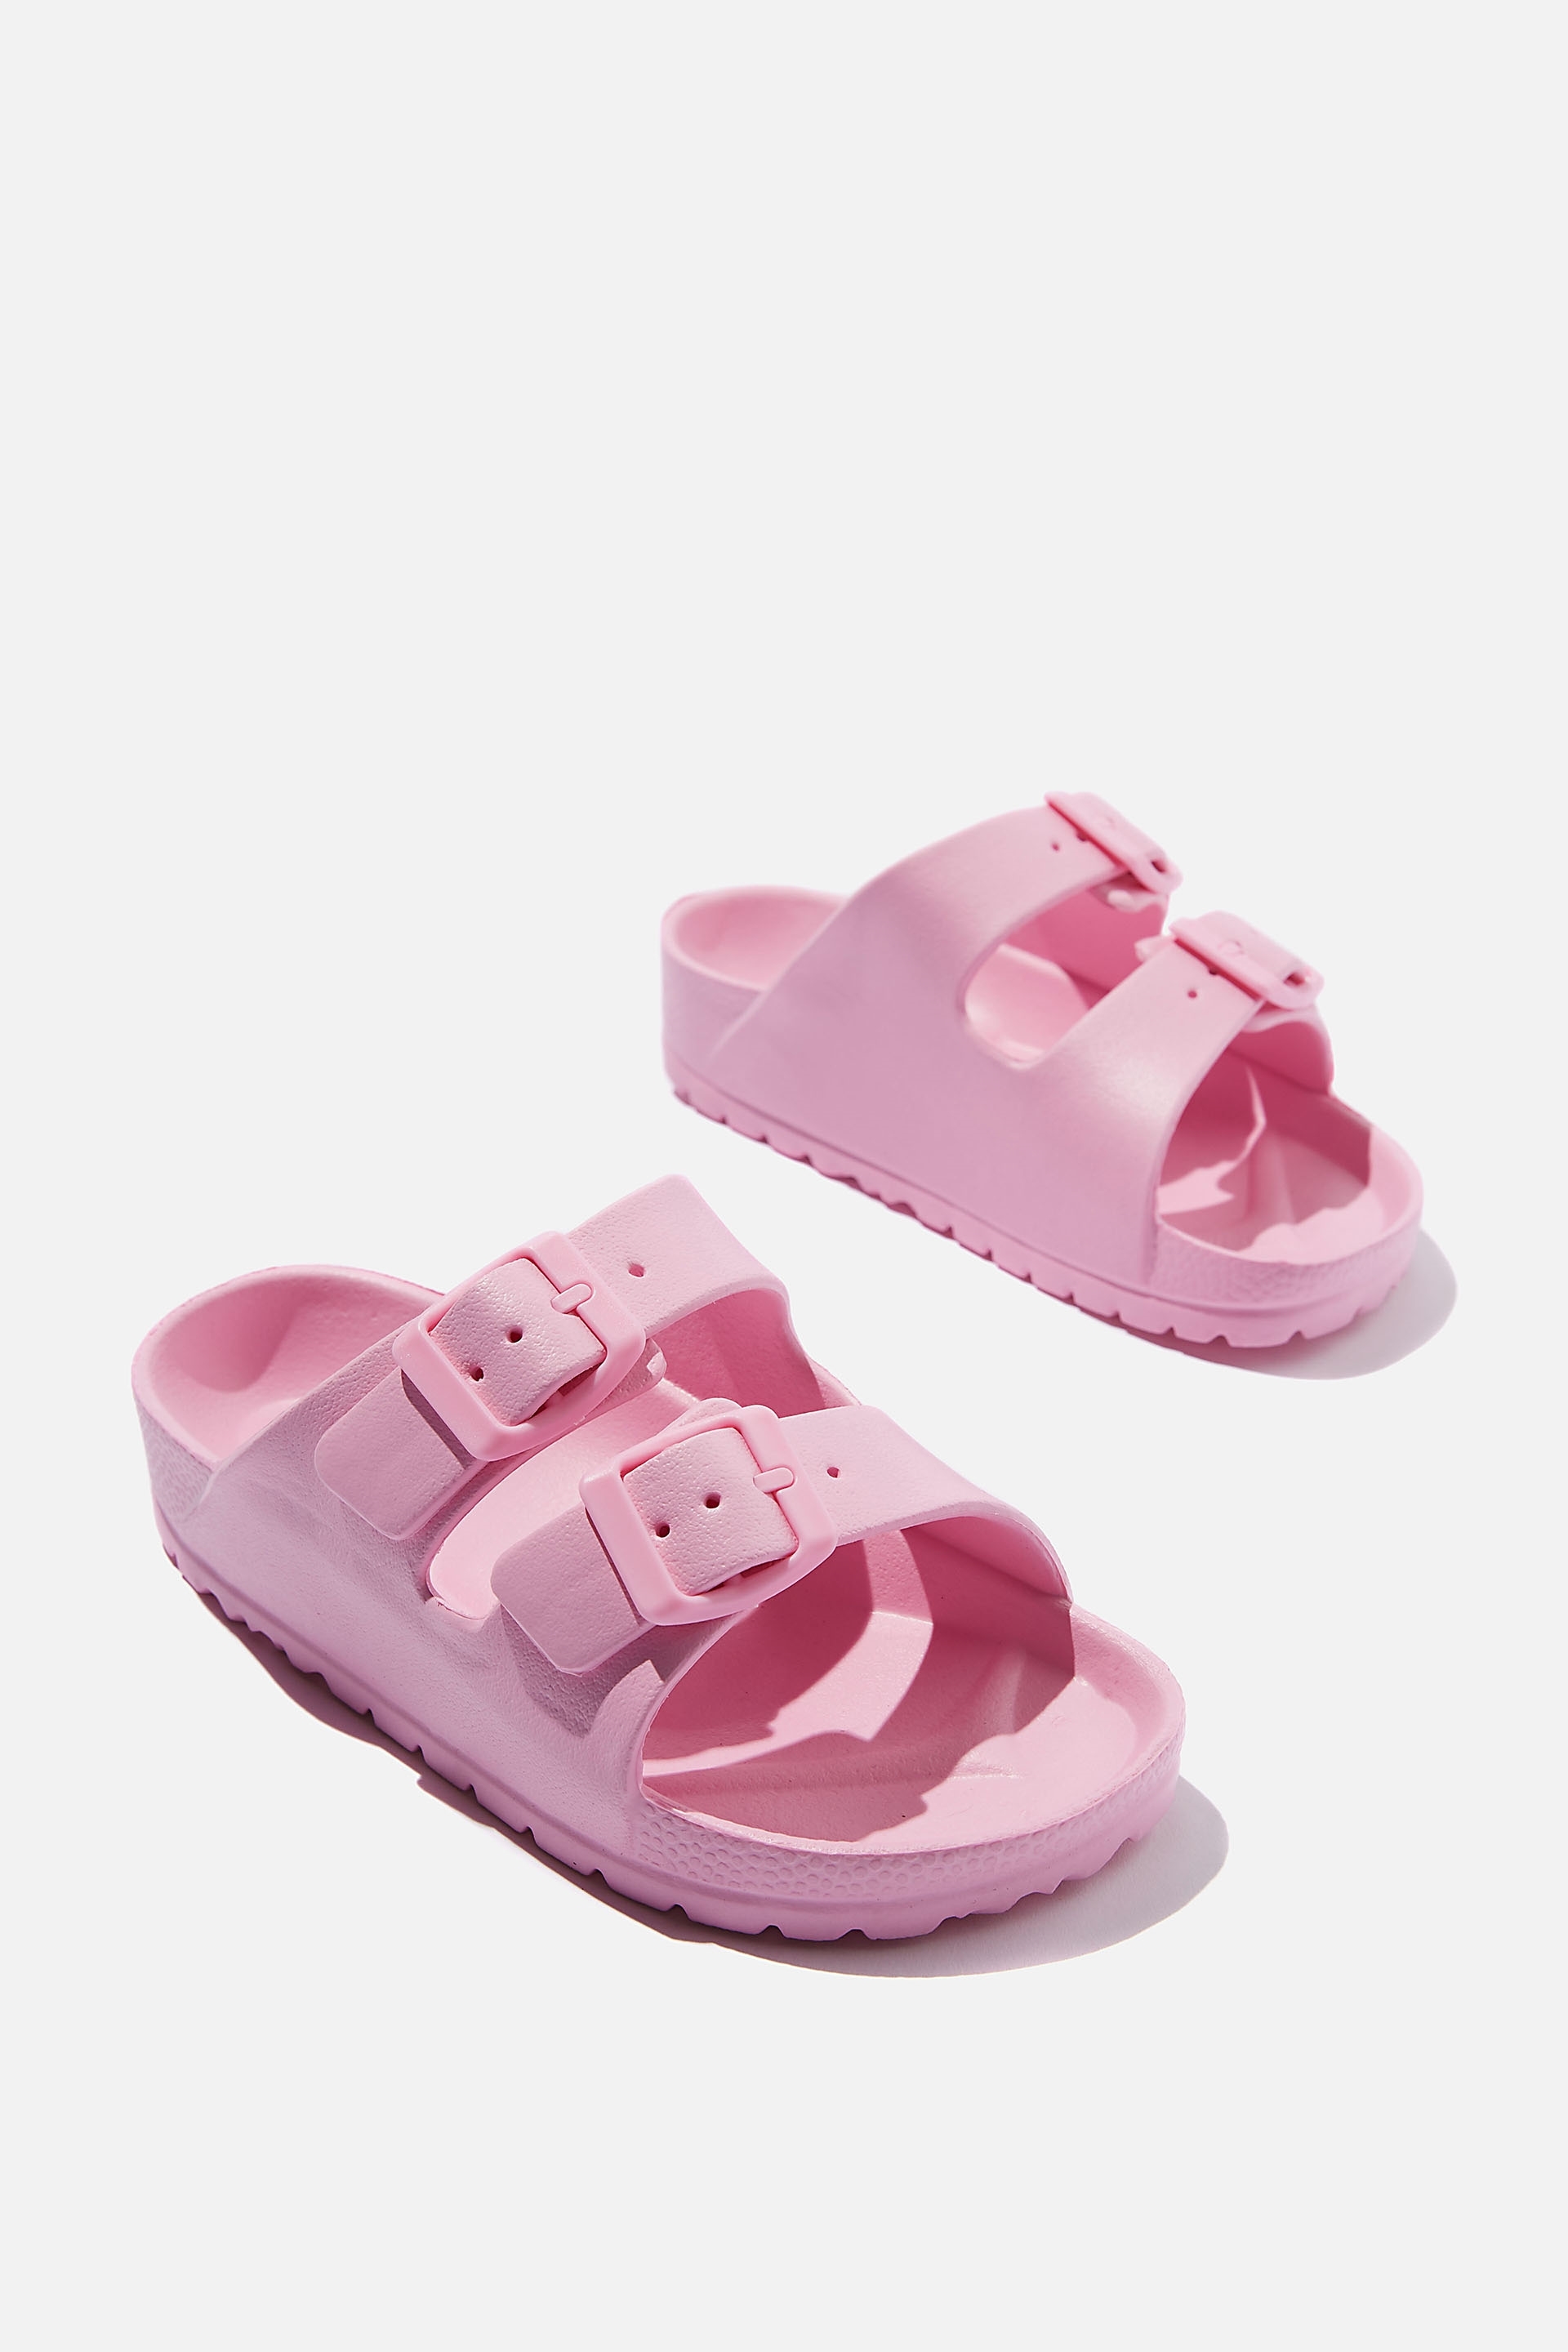 Cotton On Kids - Twin Strap Slide - Cali pink